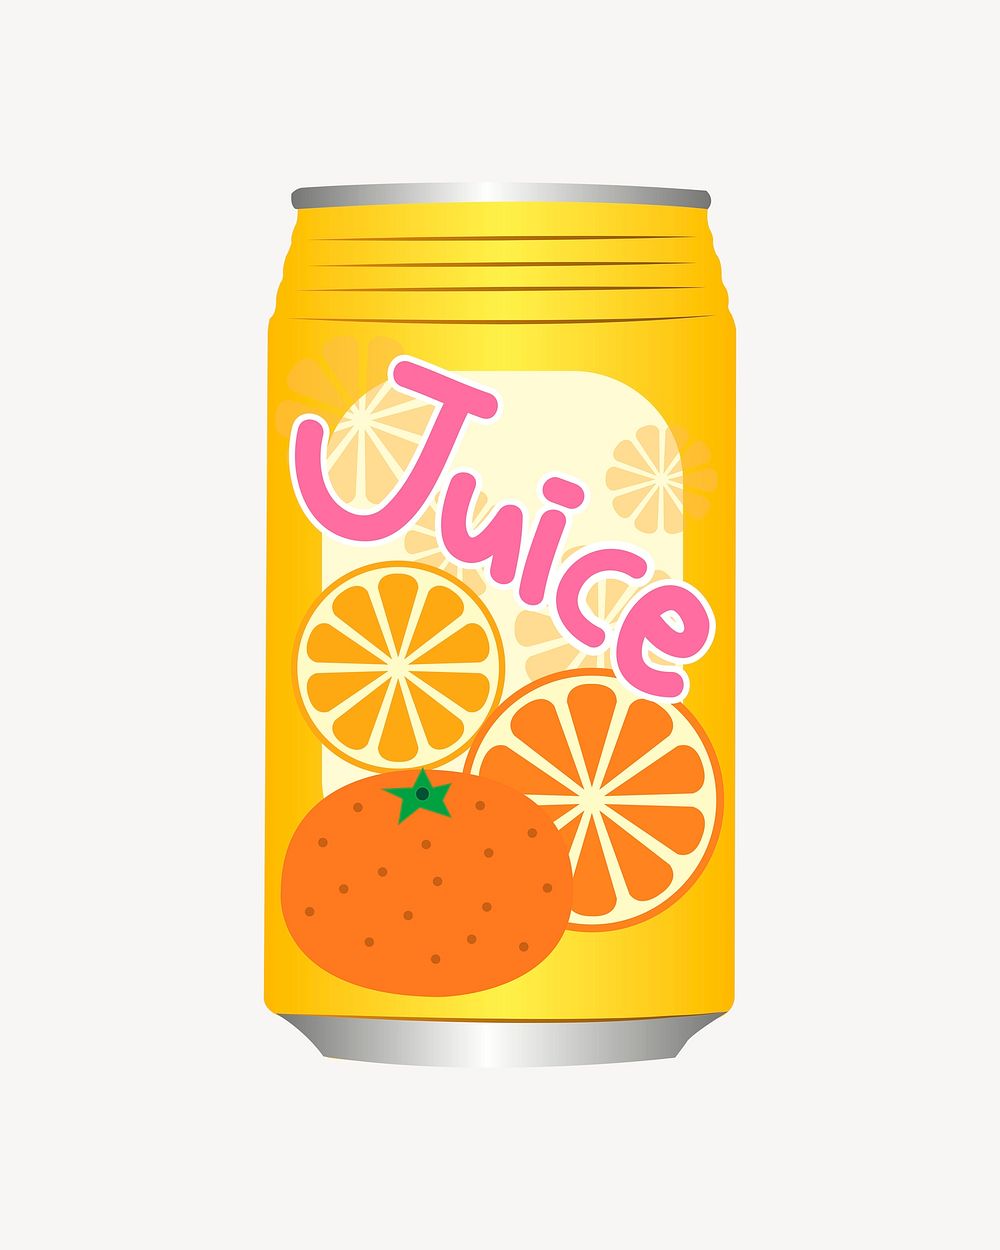 Orange soda can clipart, illustration psd. Free public domain CC0 image.